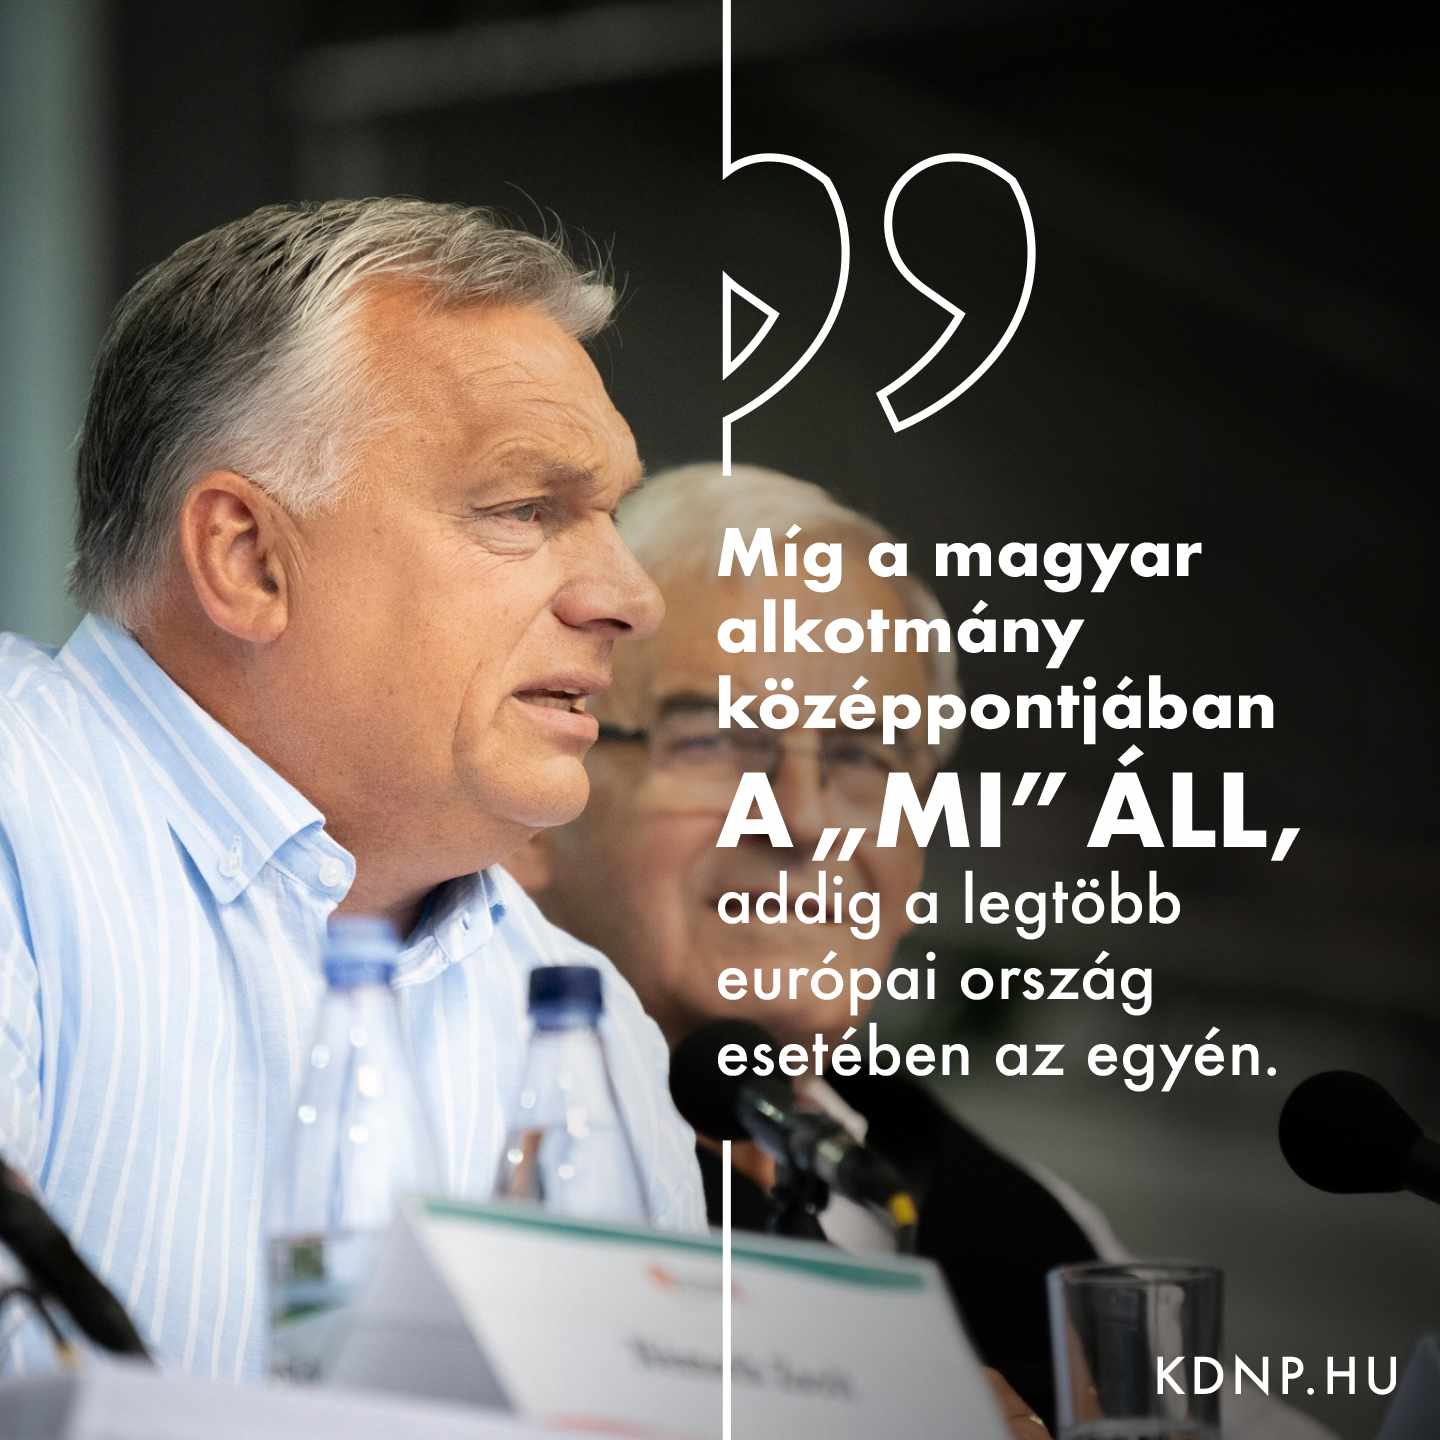 Orbán Viktor Tusványoson